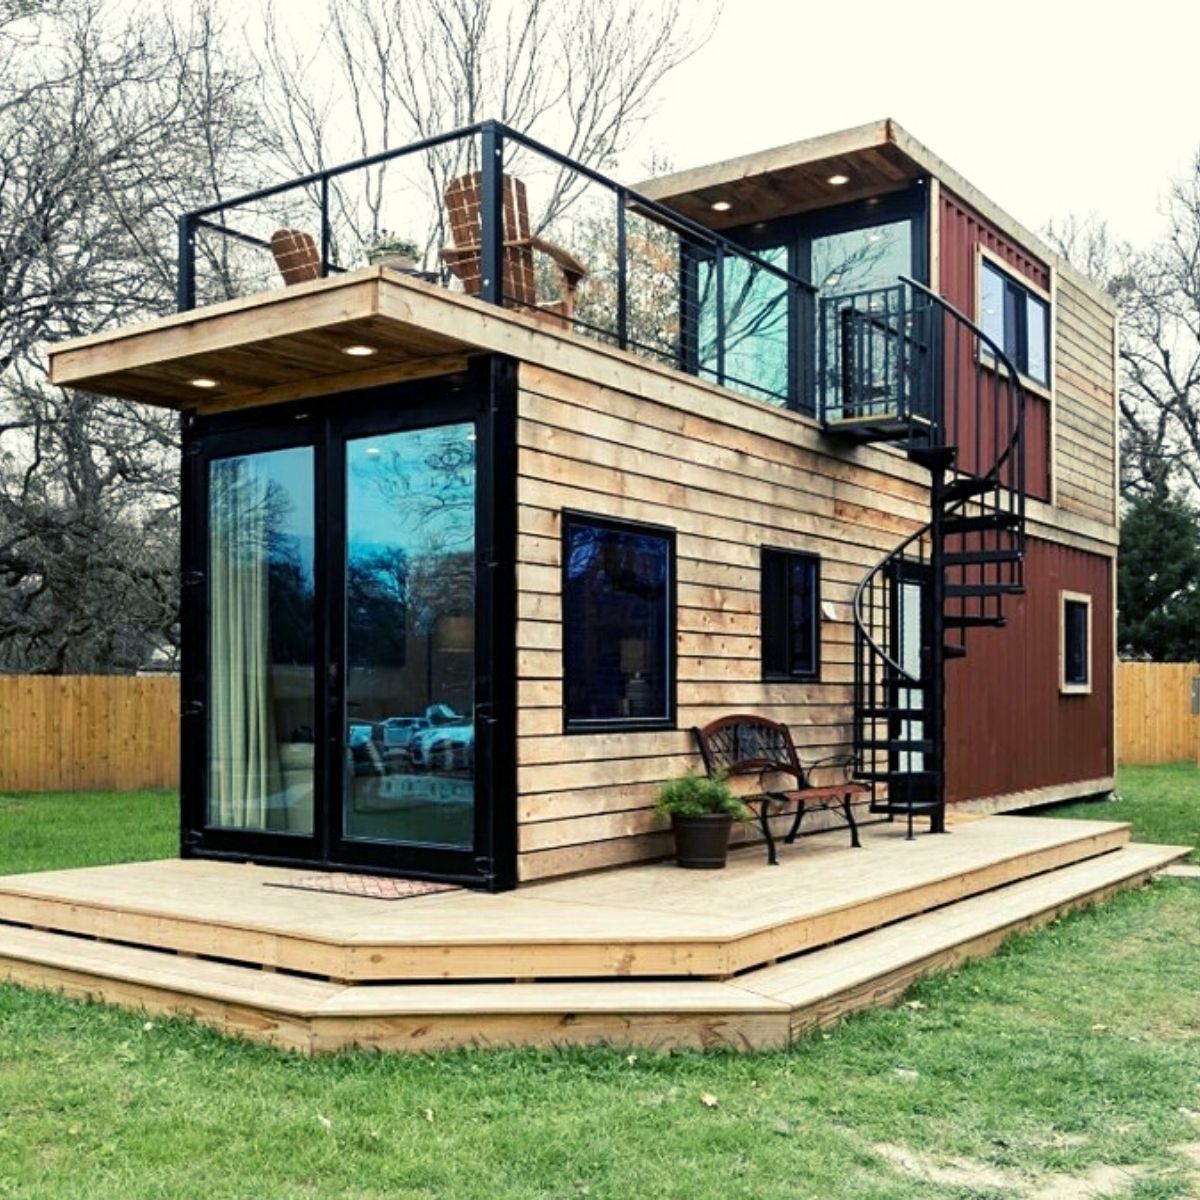 Unique Small House Designs - Image to u